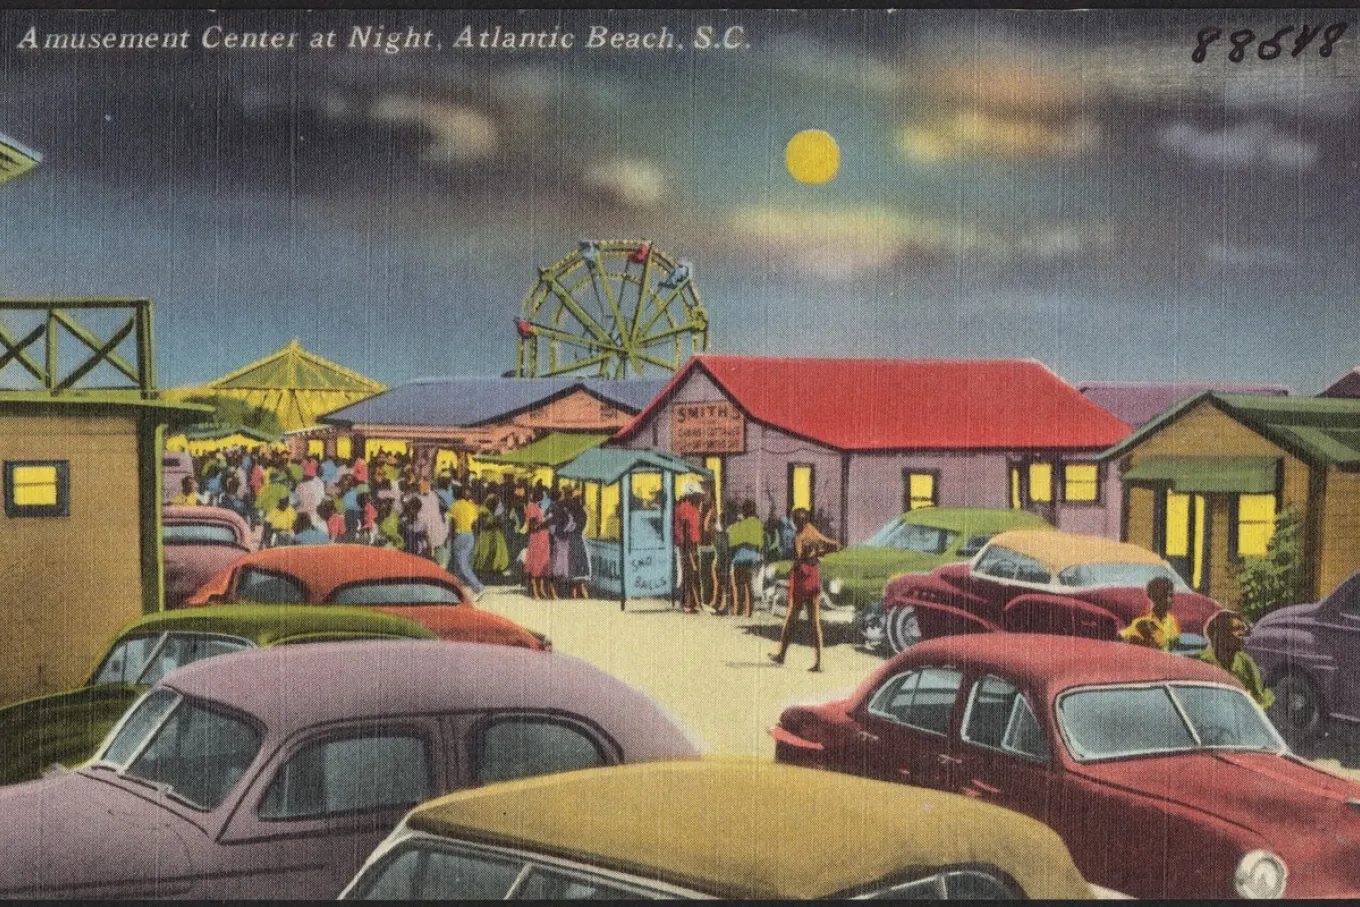 Amusement Center at Night, Atlantic Beach, S.C. BPL